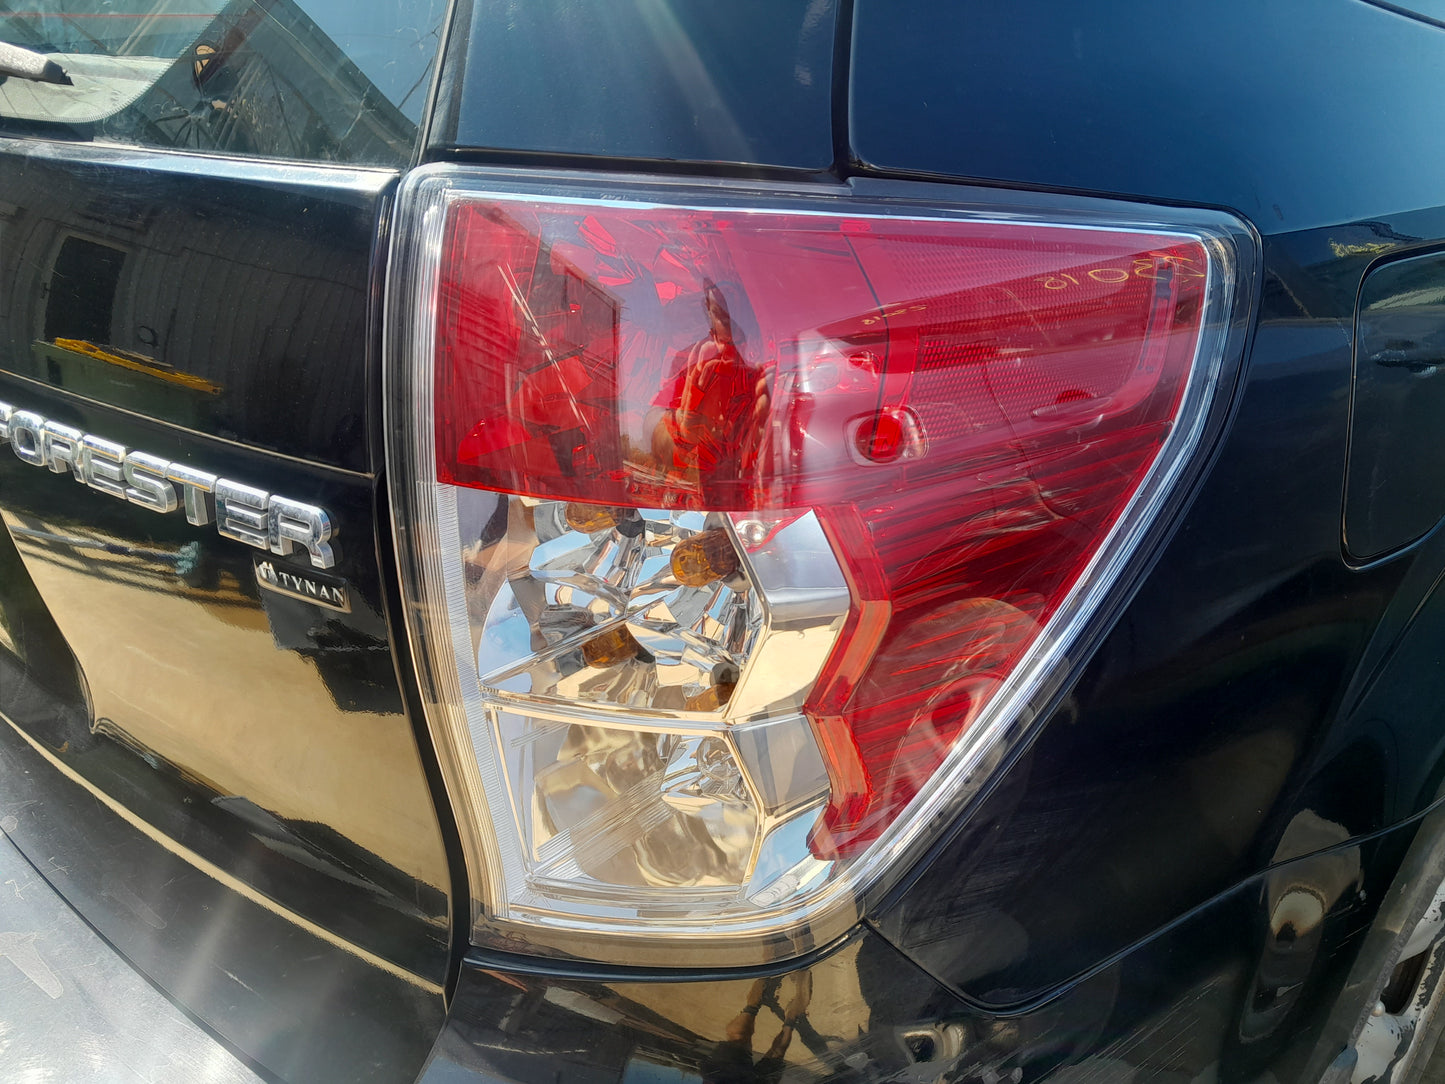 Subaru Forester Tail Light